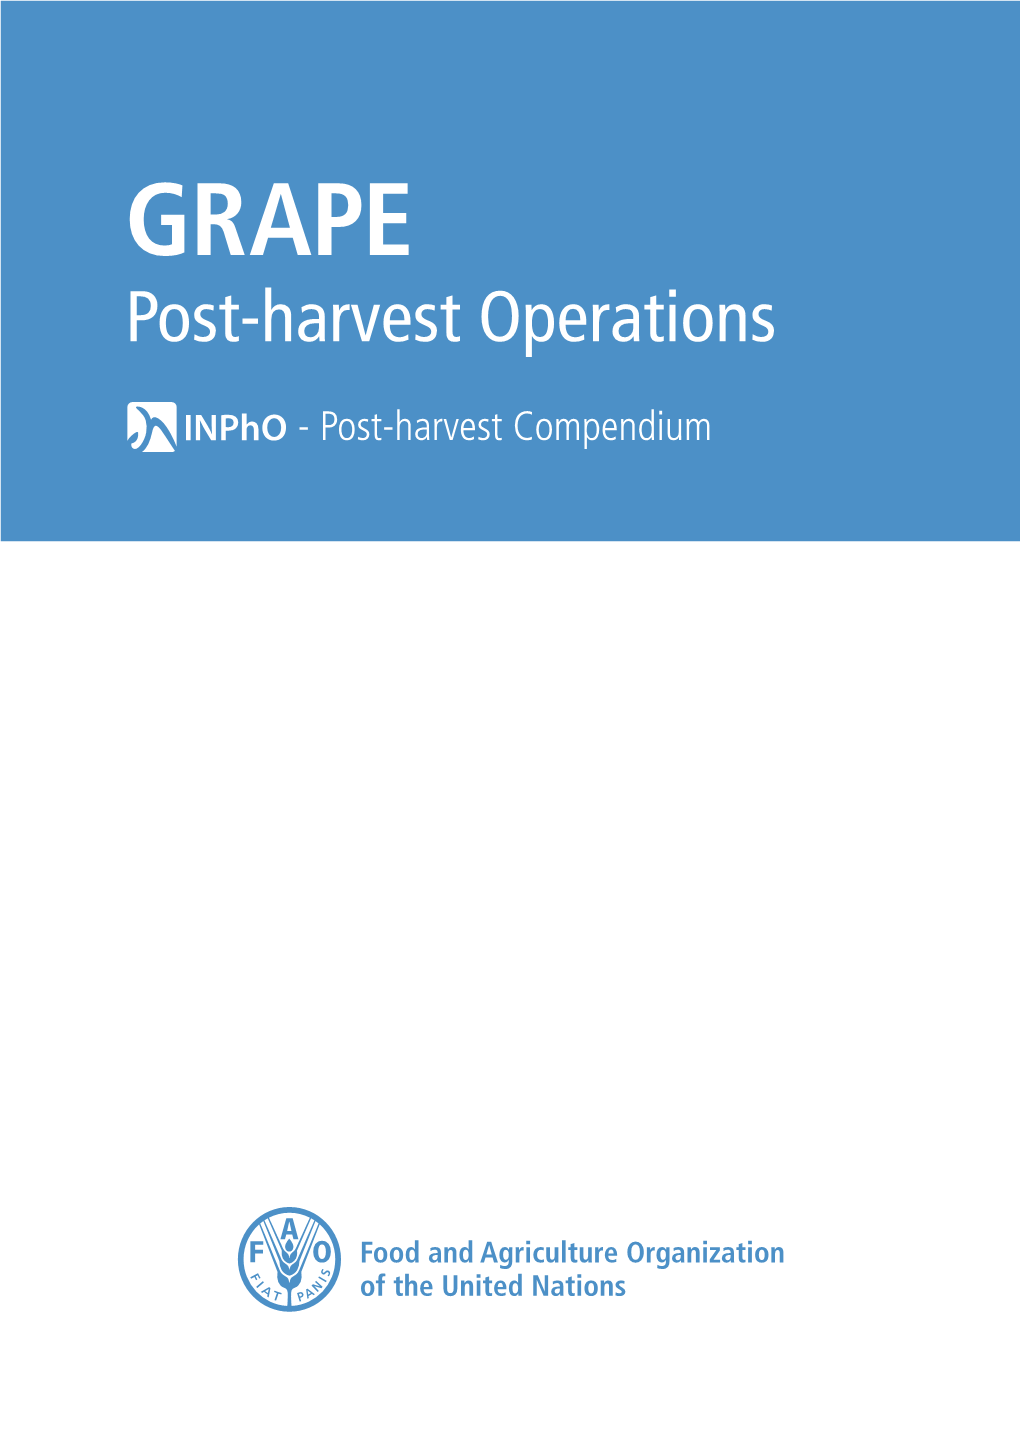 GRAPE: Post-Harvest Operations